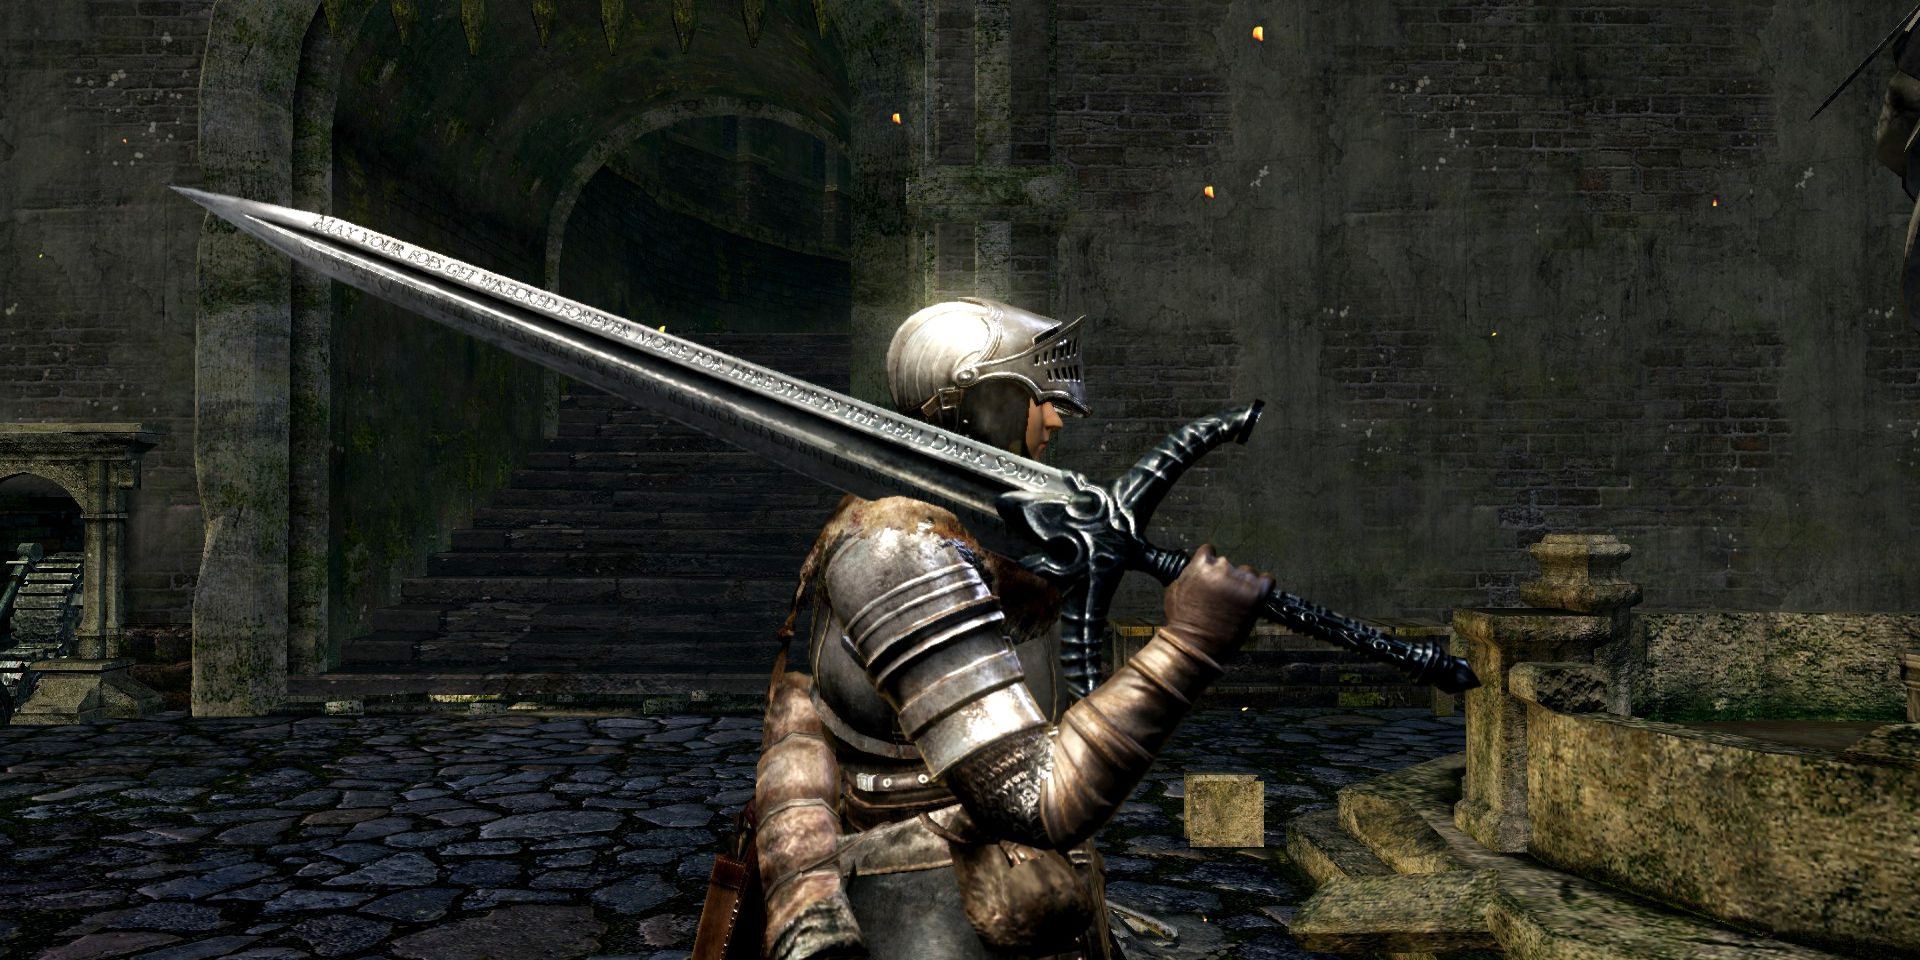 Dark Souls player holding the Black Knight Sword.